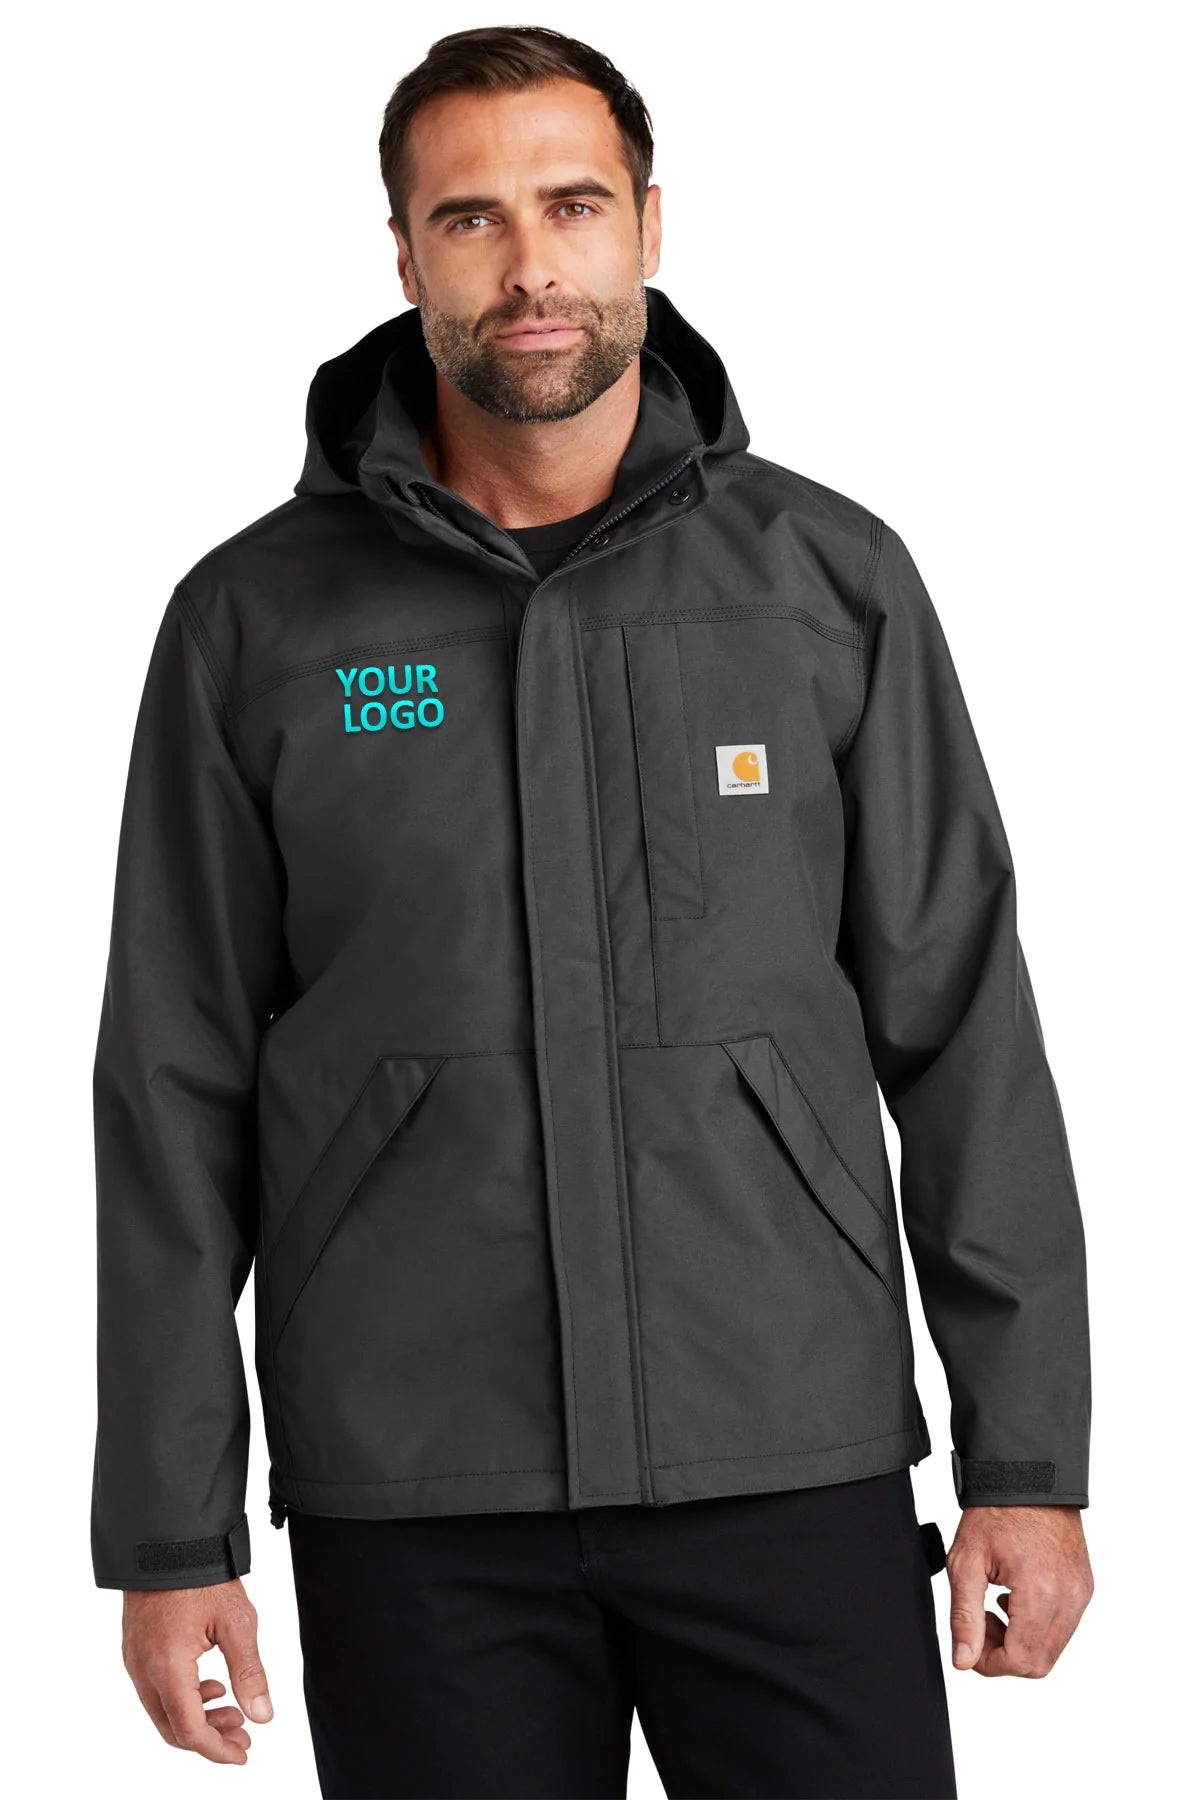 Carhartt Shadow Grey CT104670 jackets with company logo